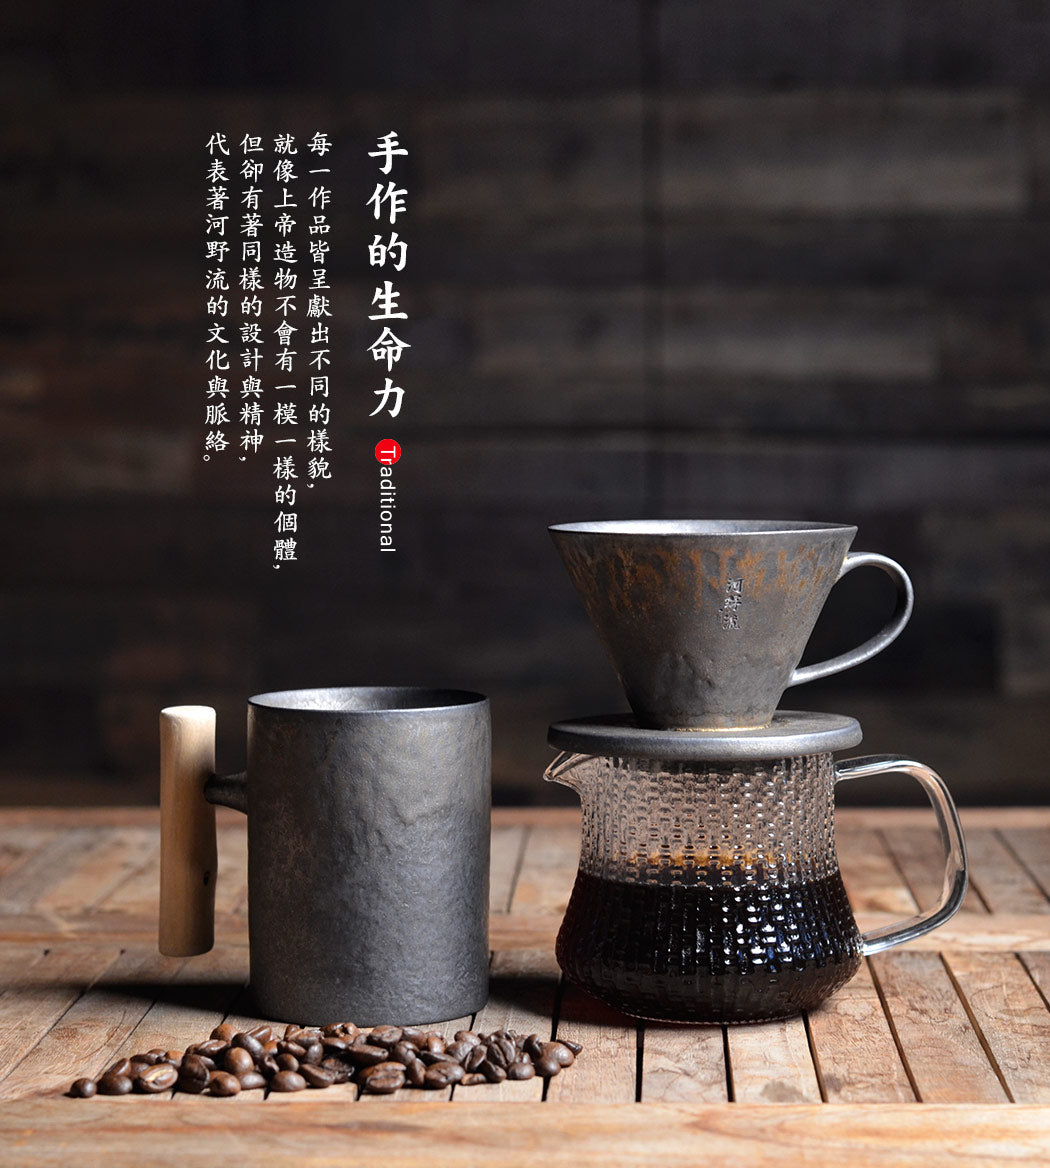 Kono Ryu Bunkyo Handmade Filter Cup｜For 1-2 Cups｜Wooden Box